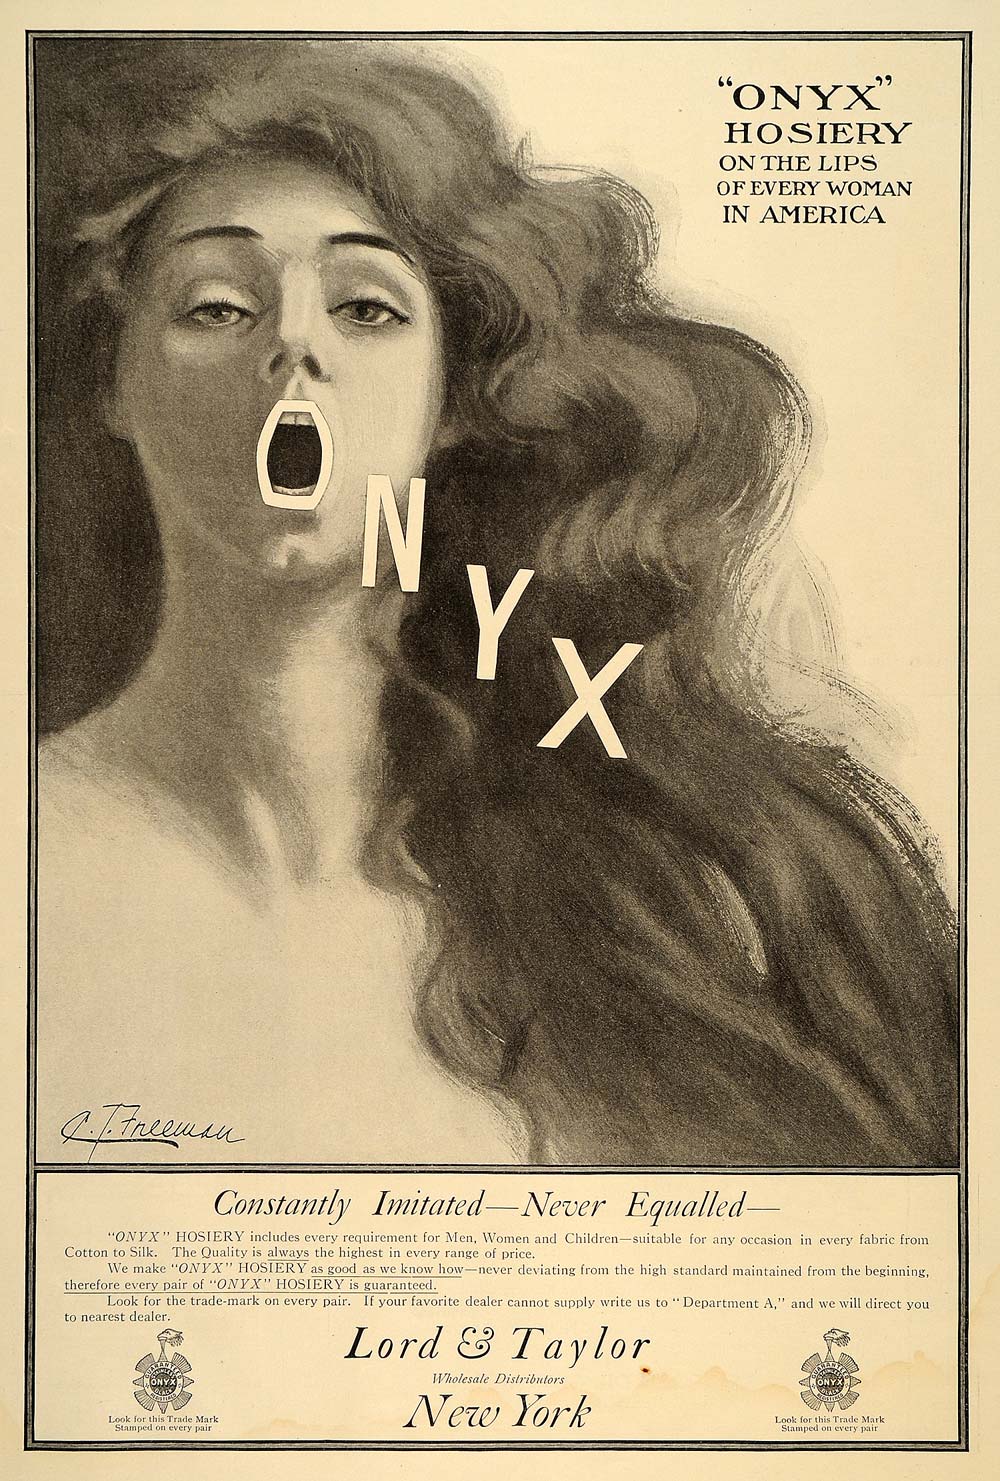 1909 Ad Onyx Hosiery Lips Women Taylor Suggestive Lord - ORIGINAL LHJ1